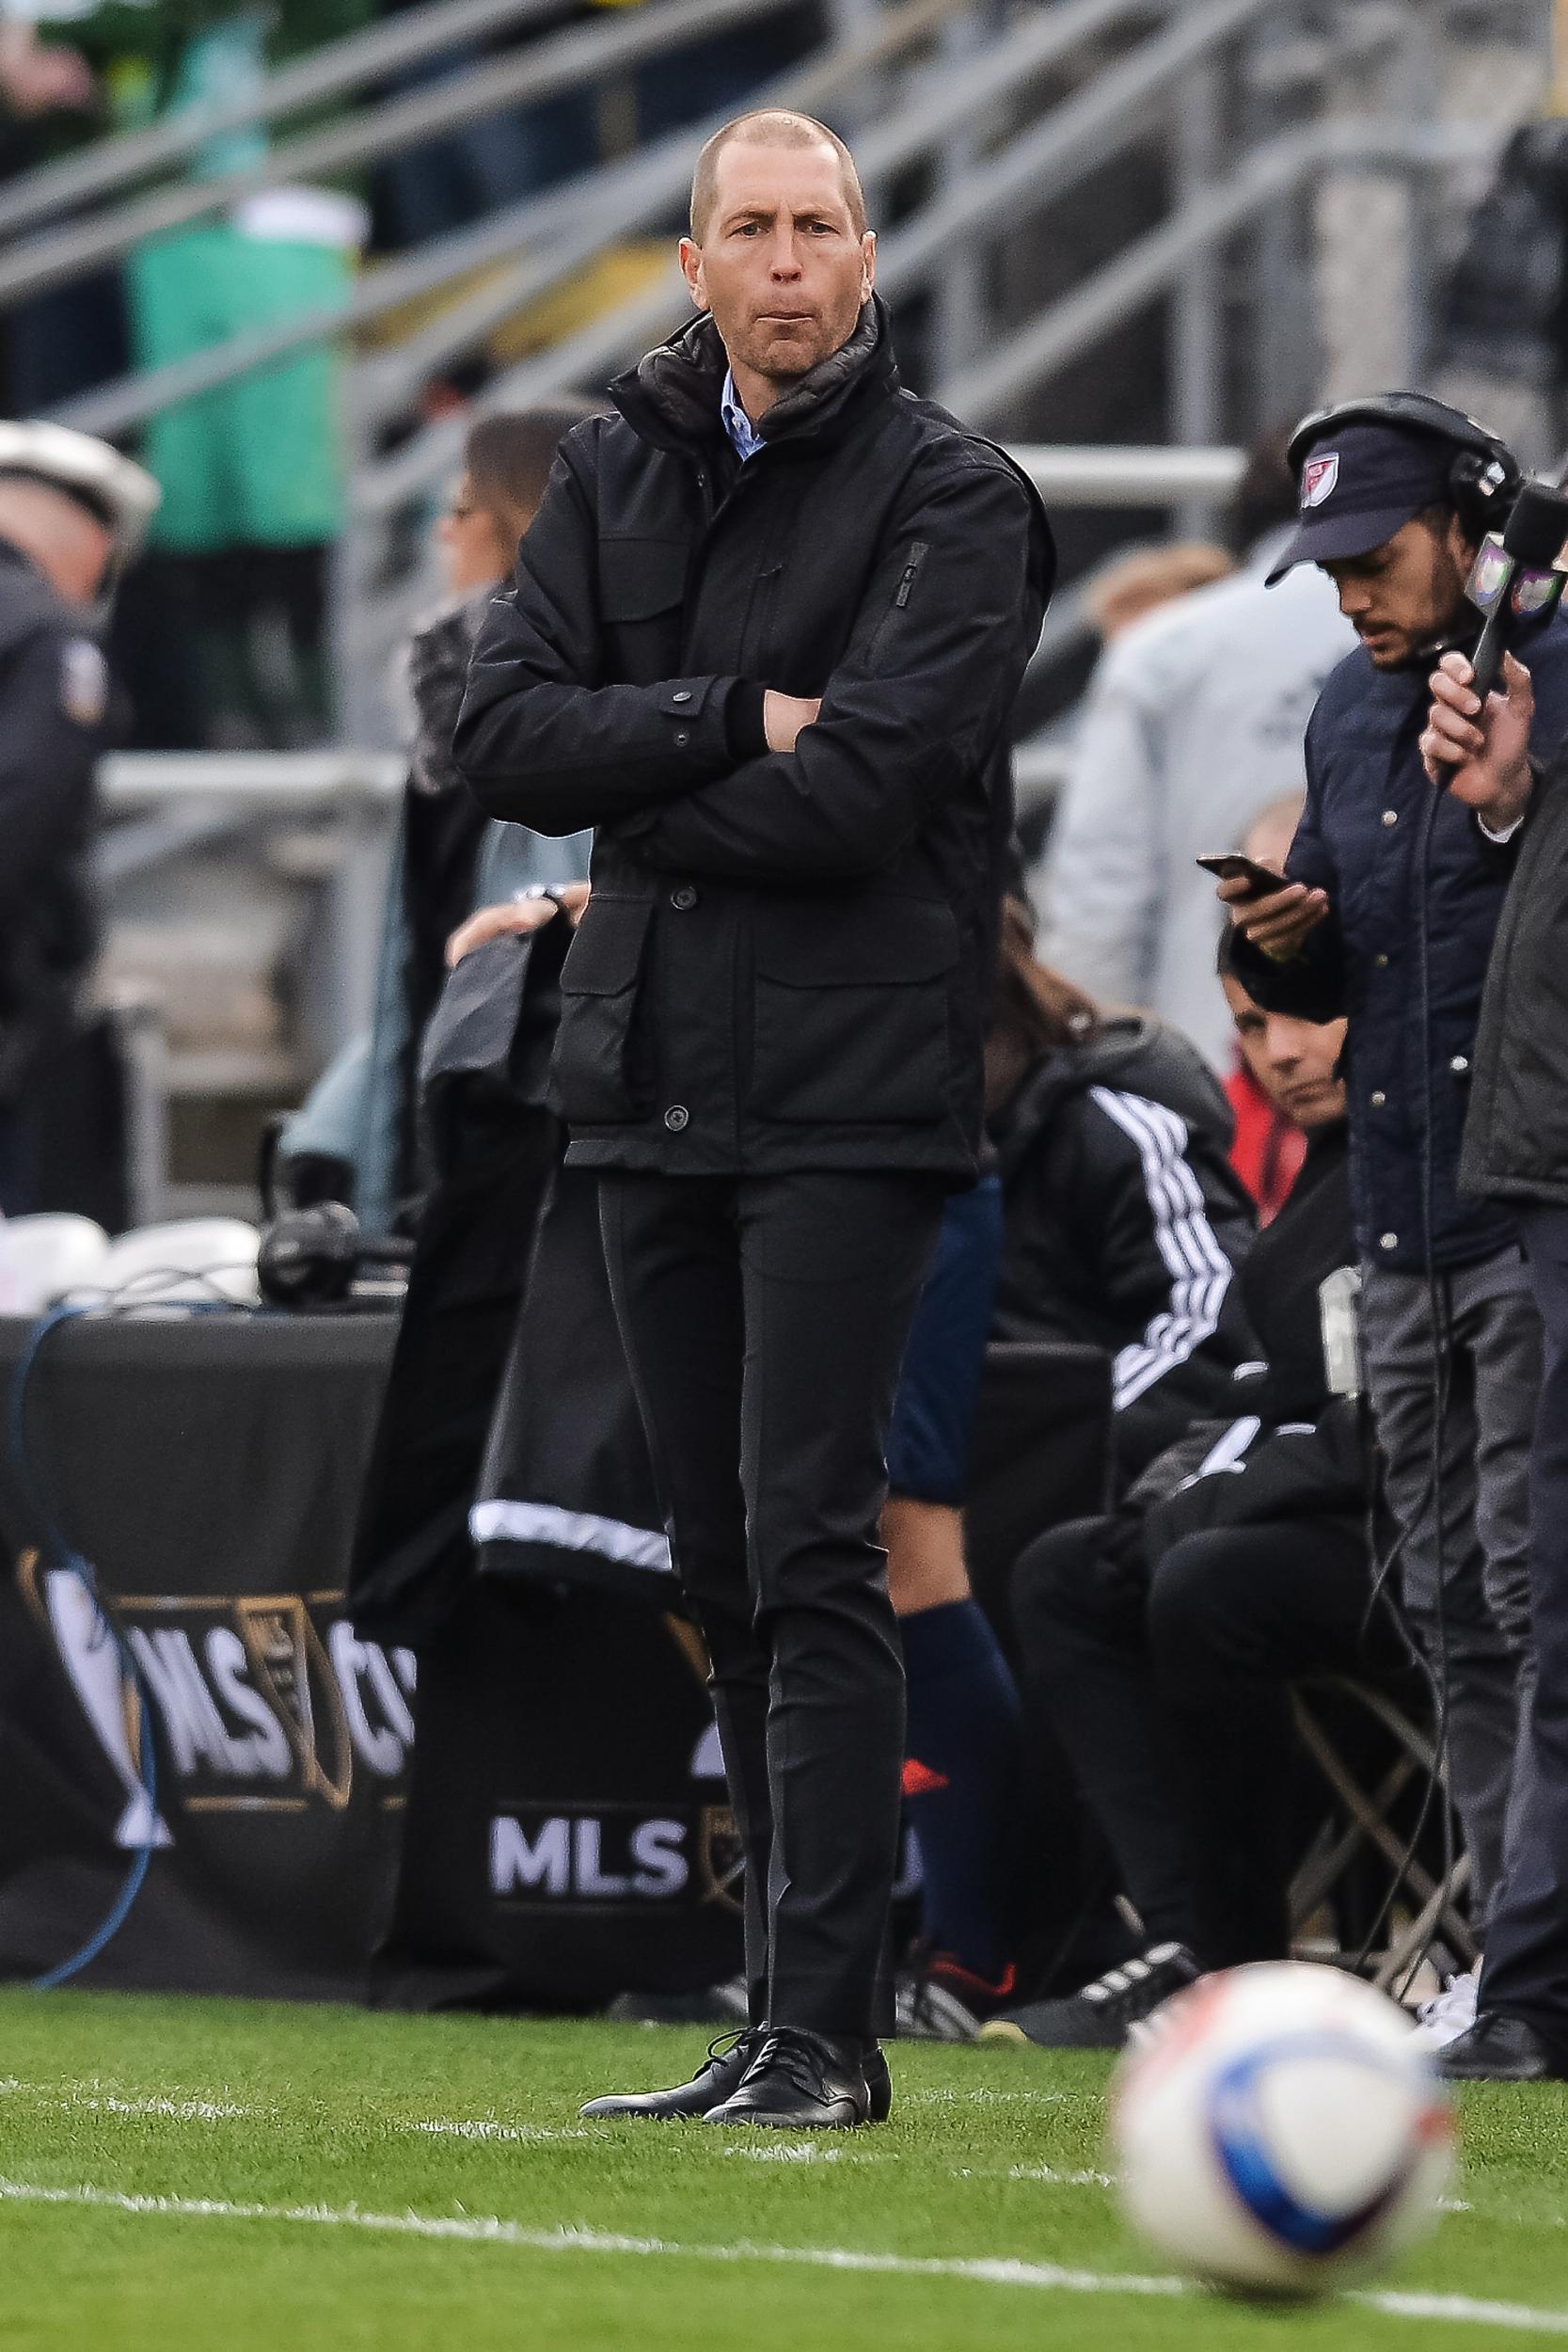 Gregg Berhalter has been head coach and technical director at Columbus Crew